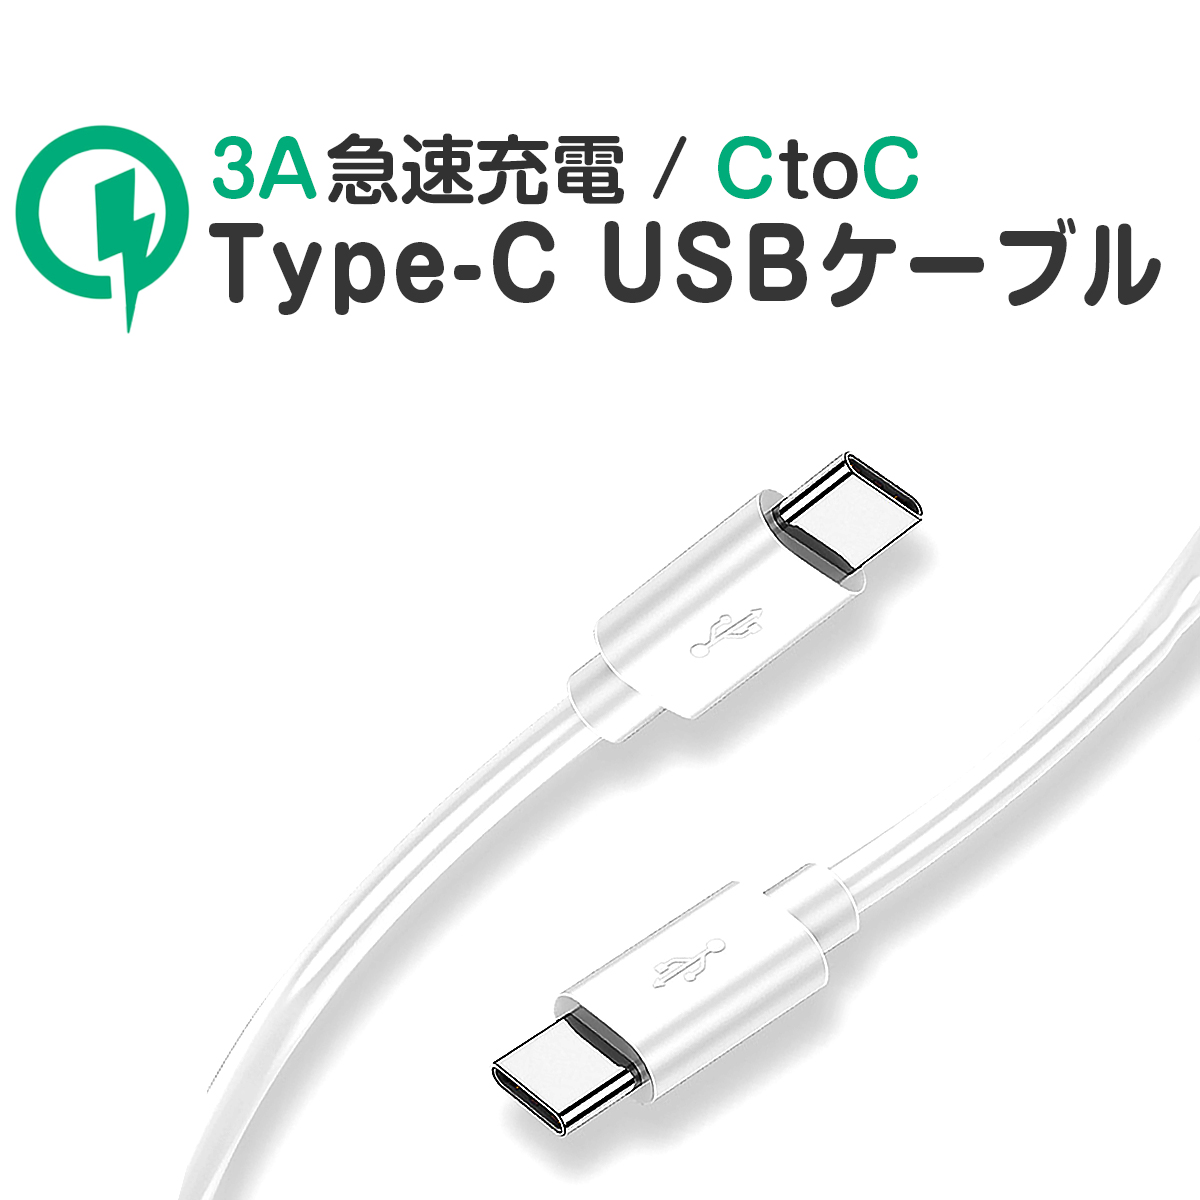 Type C USBケーブル 急速充電 QC3.0 高速データ転送 通信 5V3A 1m 白 MacBook iPad iPhone Galaxy Android 他機種対応 1ヶ月保証